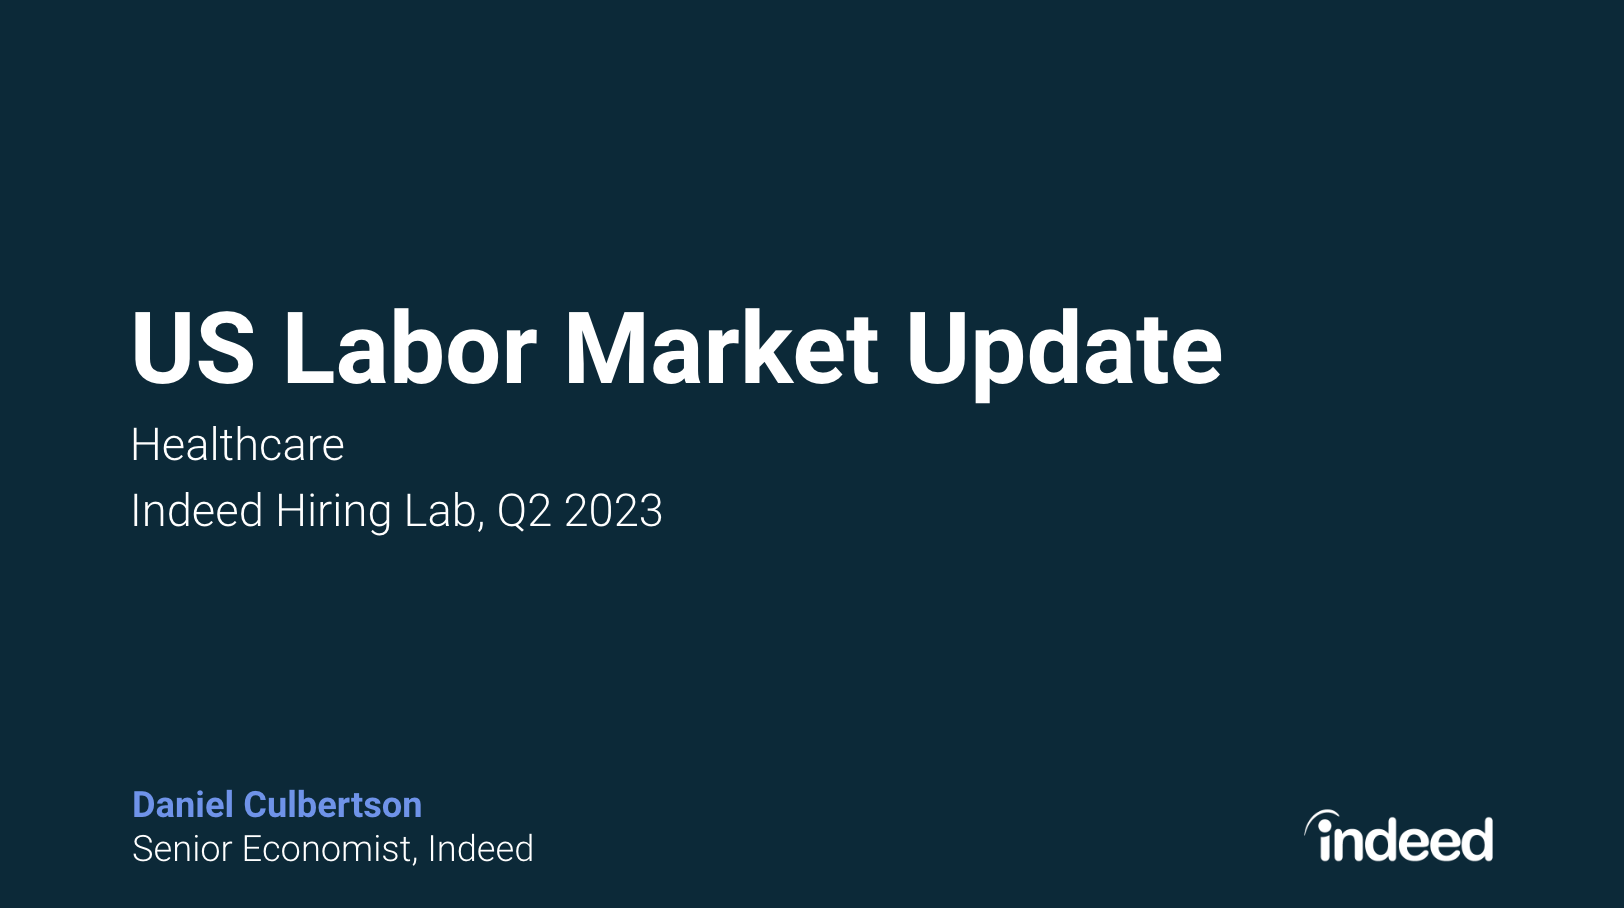 US Healthcare Labor Market Update Q2 2023